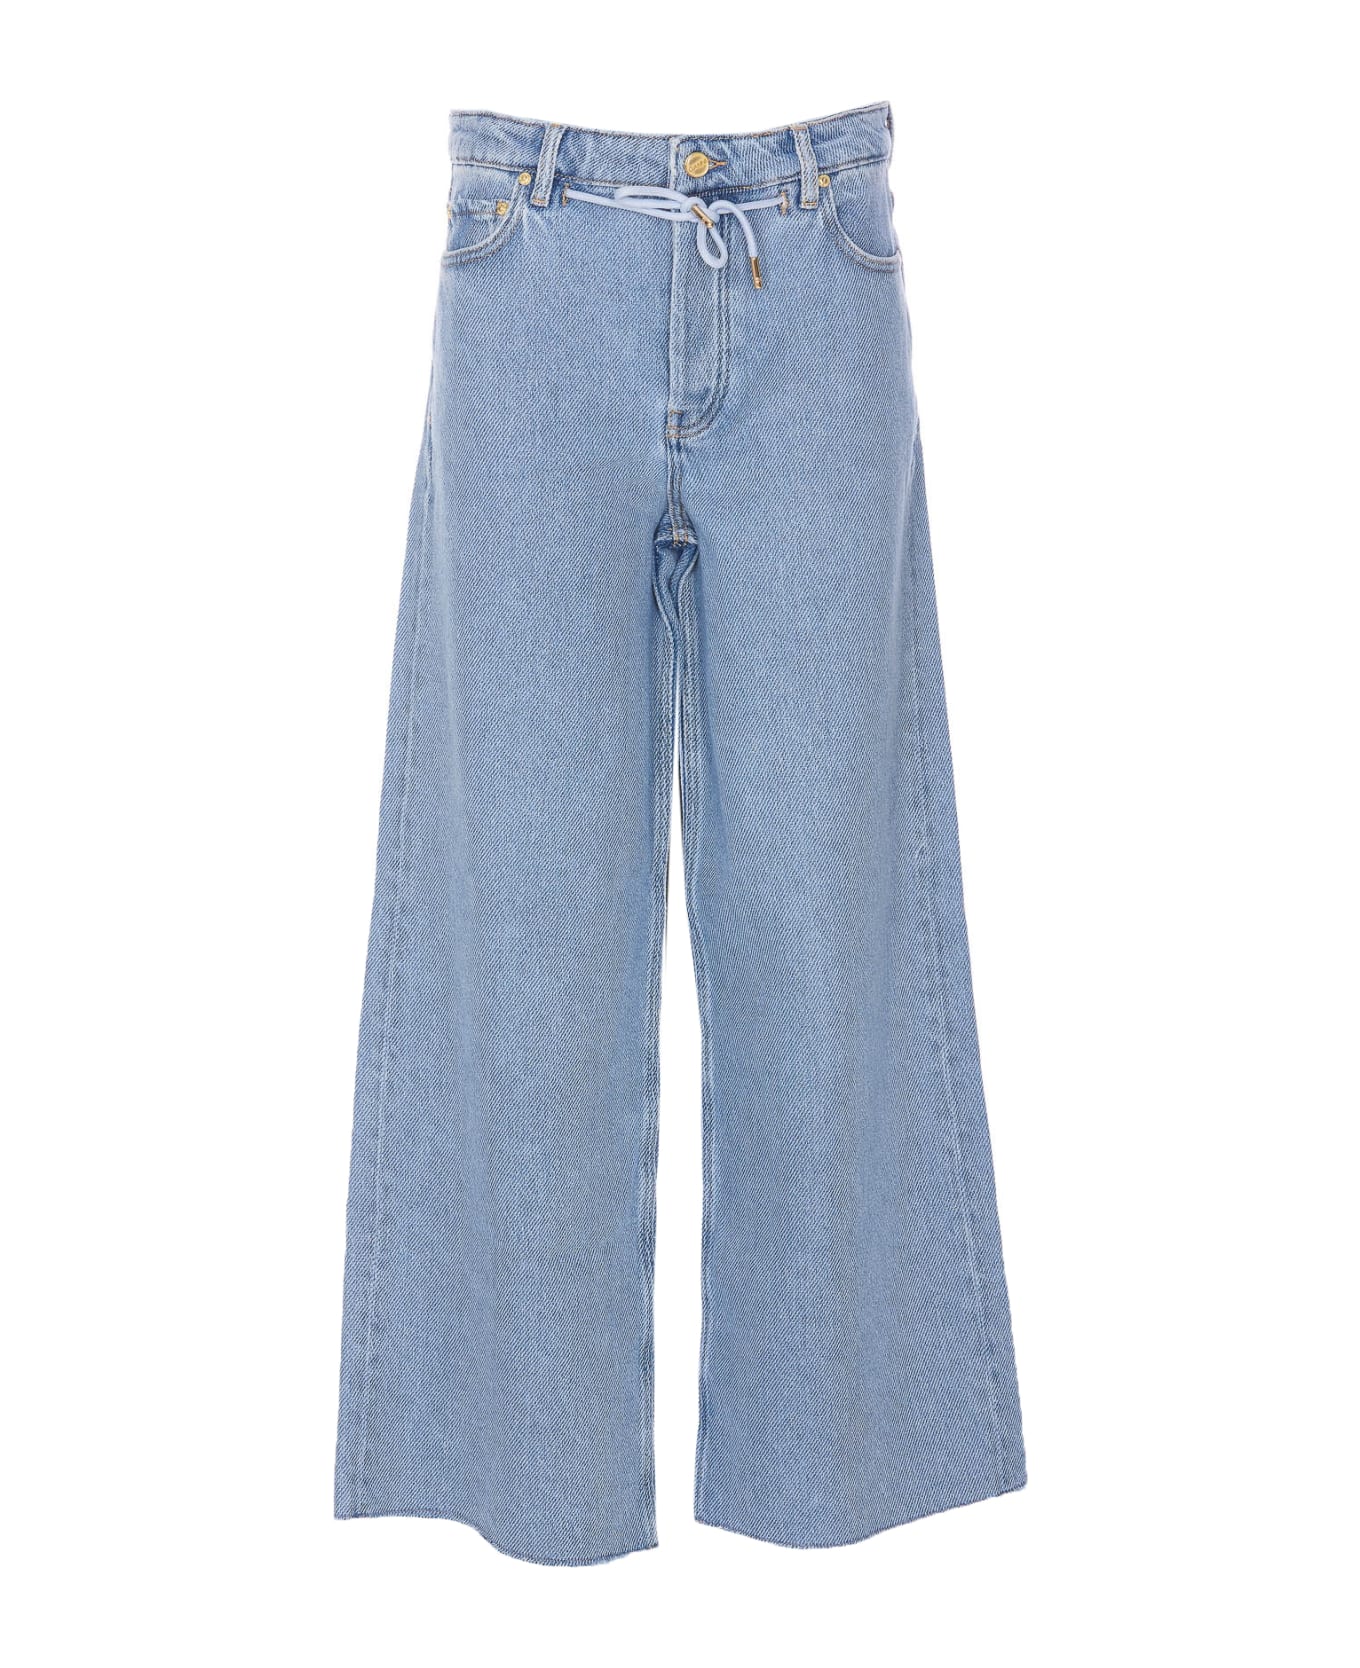 Ganni Light Blue Organic Cotton Jeans - LIGHT BLUE STONE